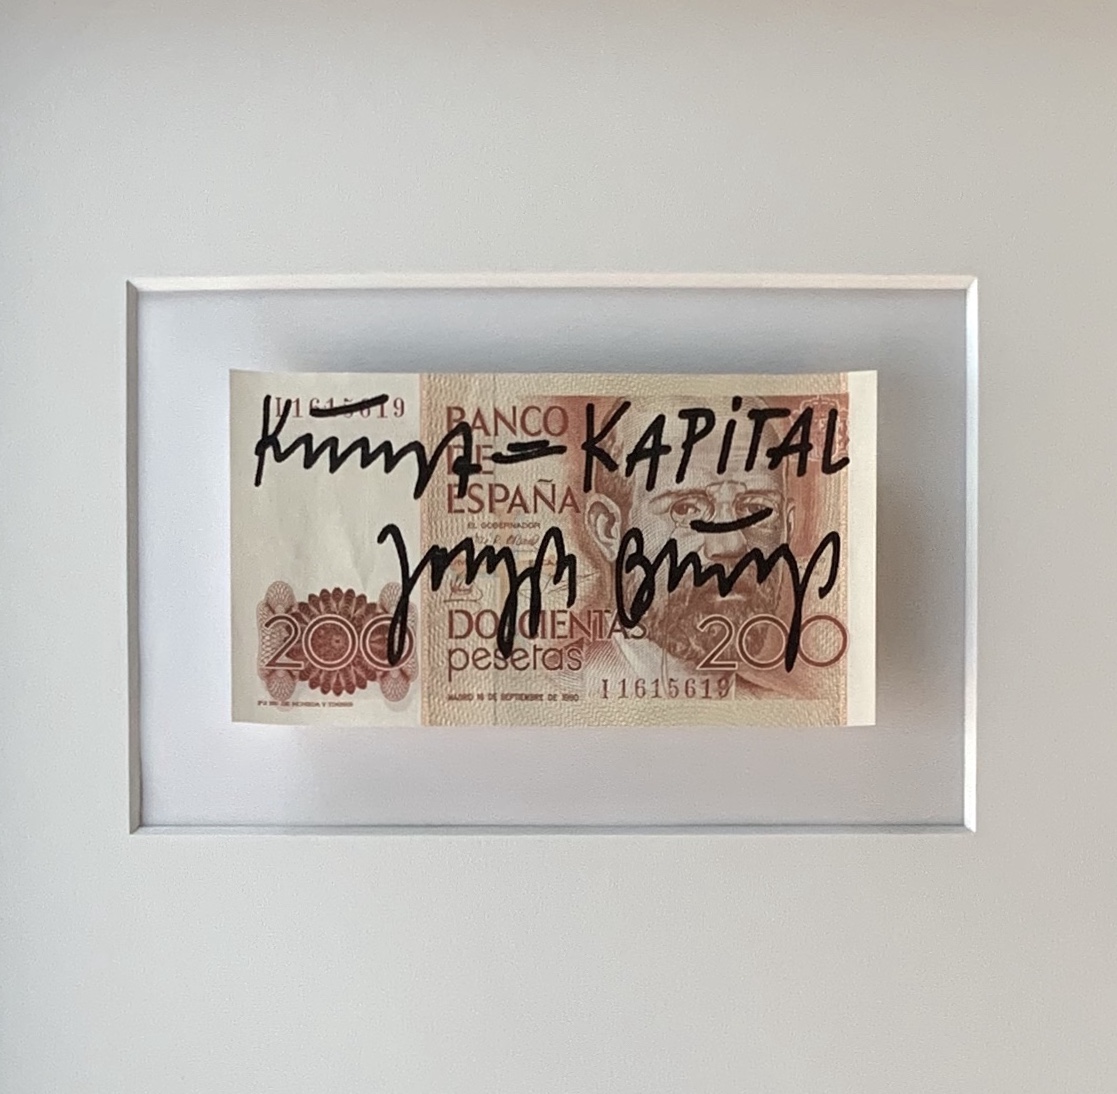 Joseph Beuys, Kunst = Kapital